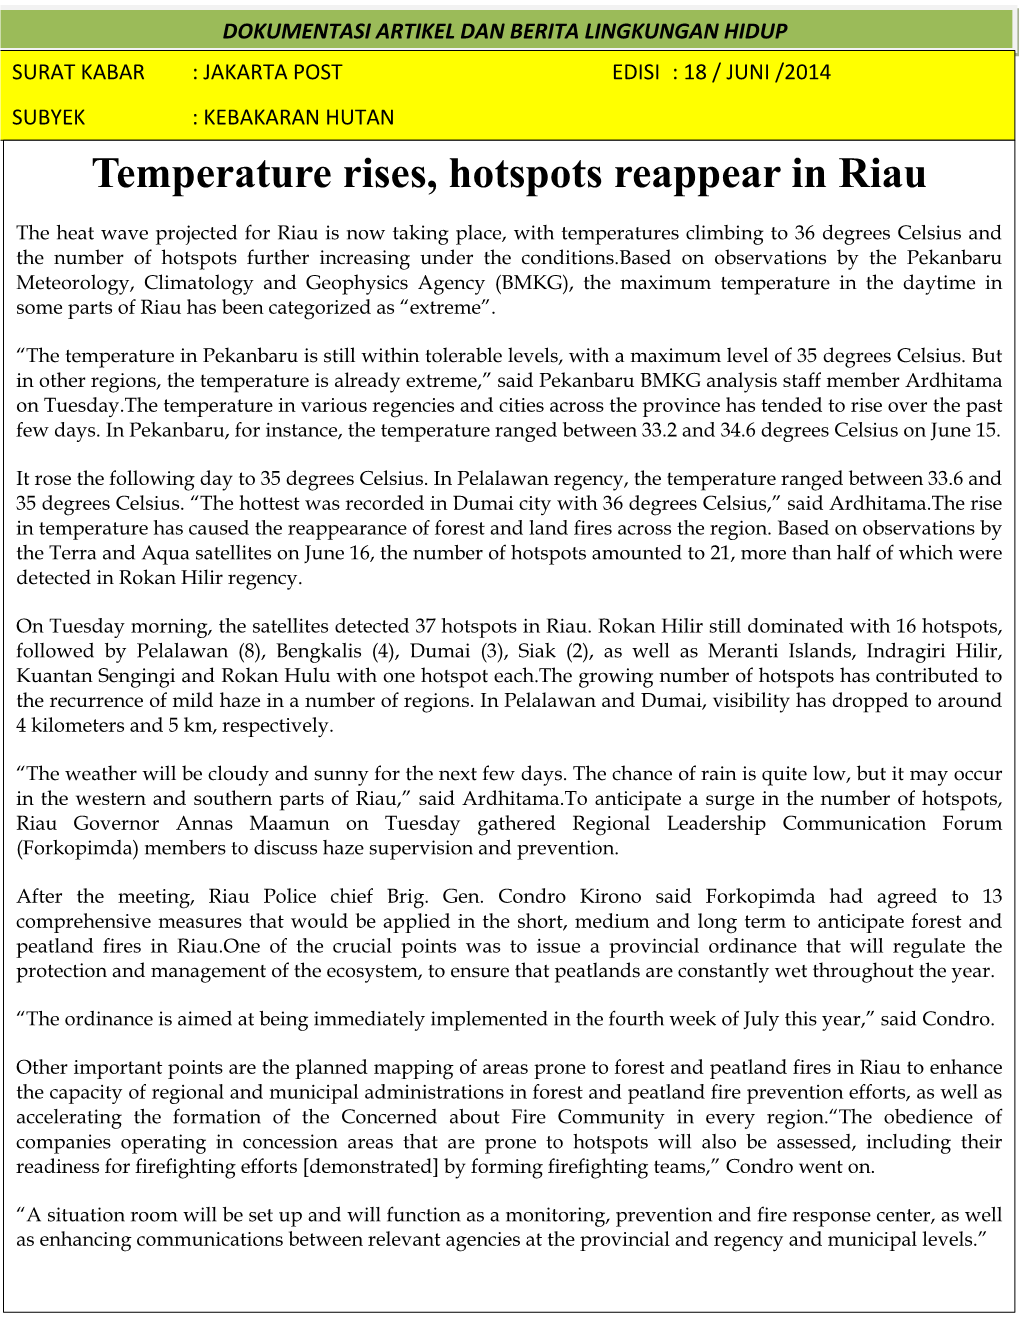 Temperature Rises, Hotspots Reappear in Riau